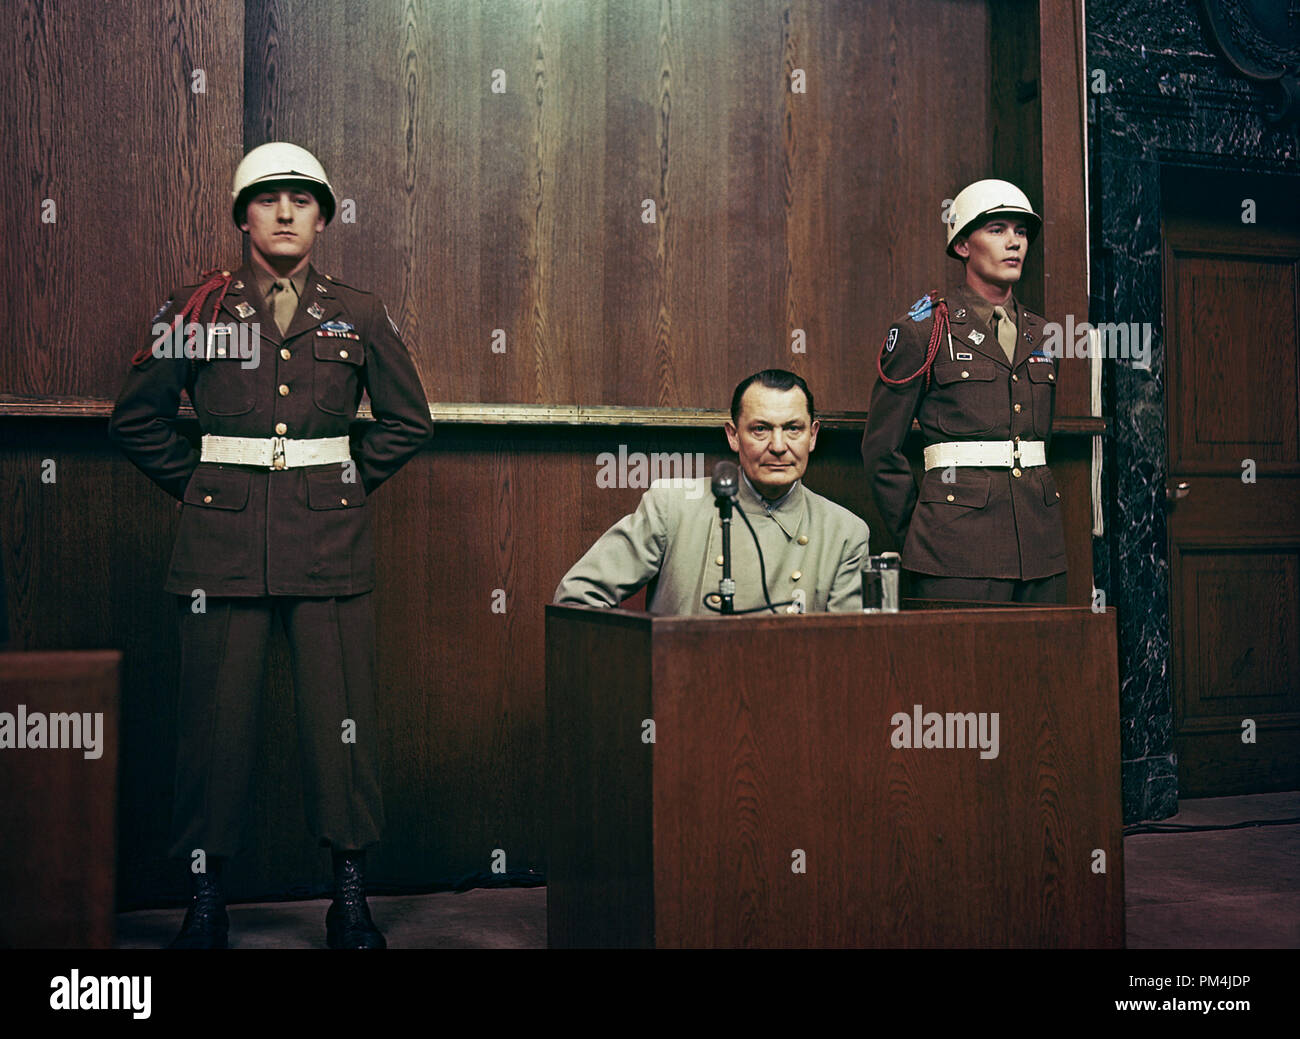 Hermann Göring im Nürnberger Prozess, Nürnberg, Deutschland, 1946 Datei Referenz Nr. 1003 682 THA Stockfoto